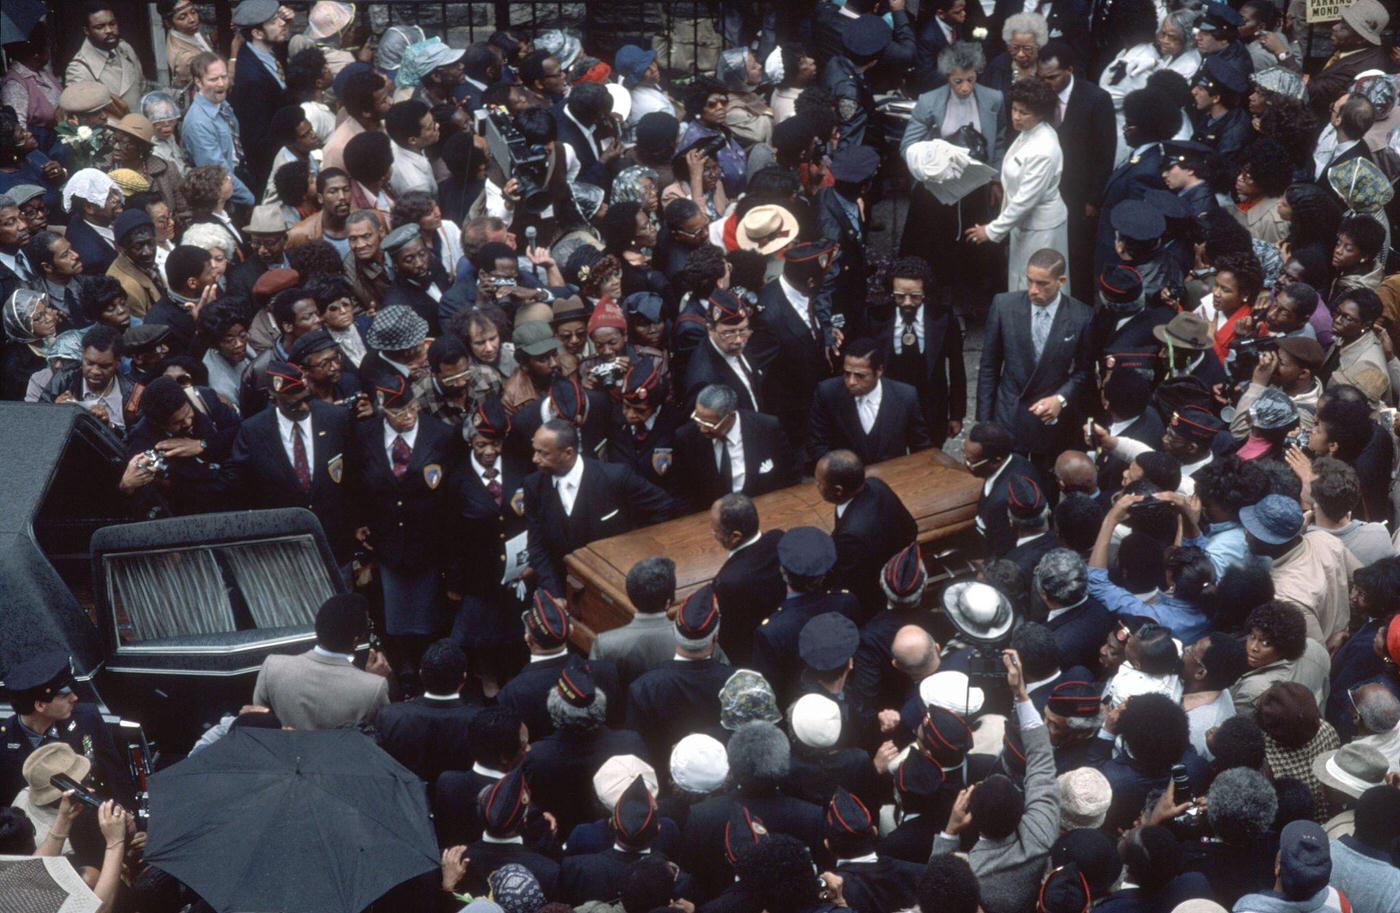 Funeral Of Count Basie In Harlem, Manhattan, 1984.